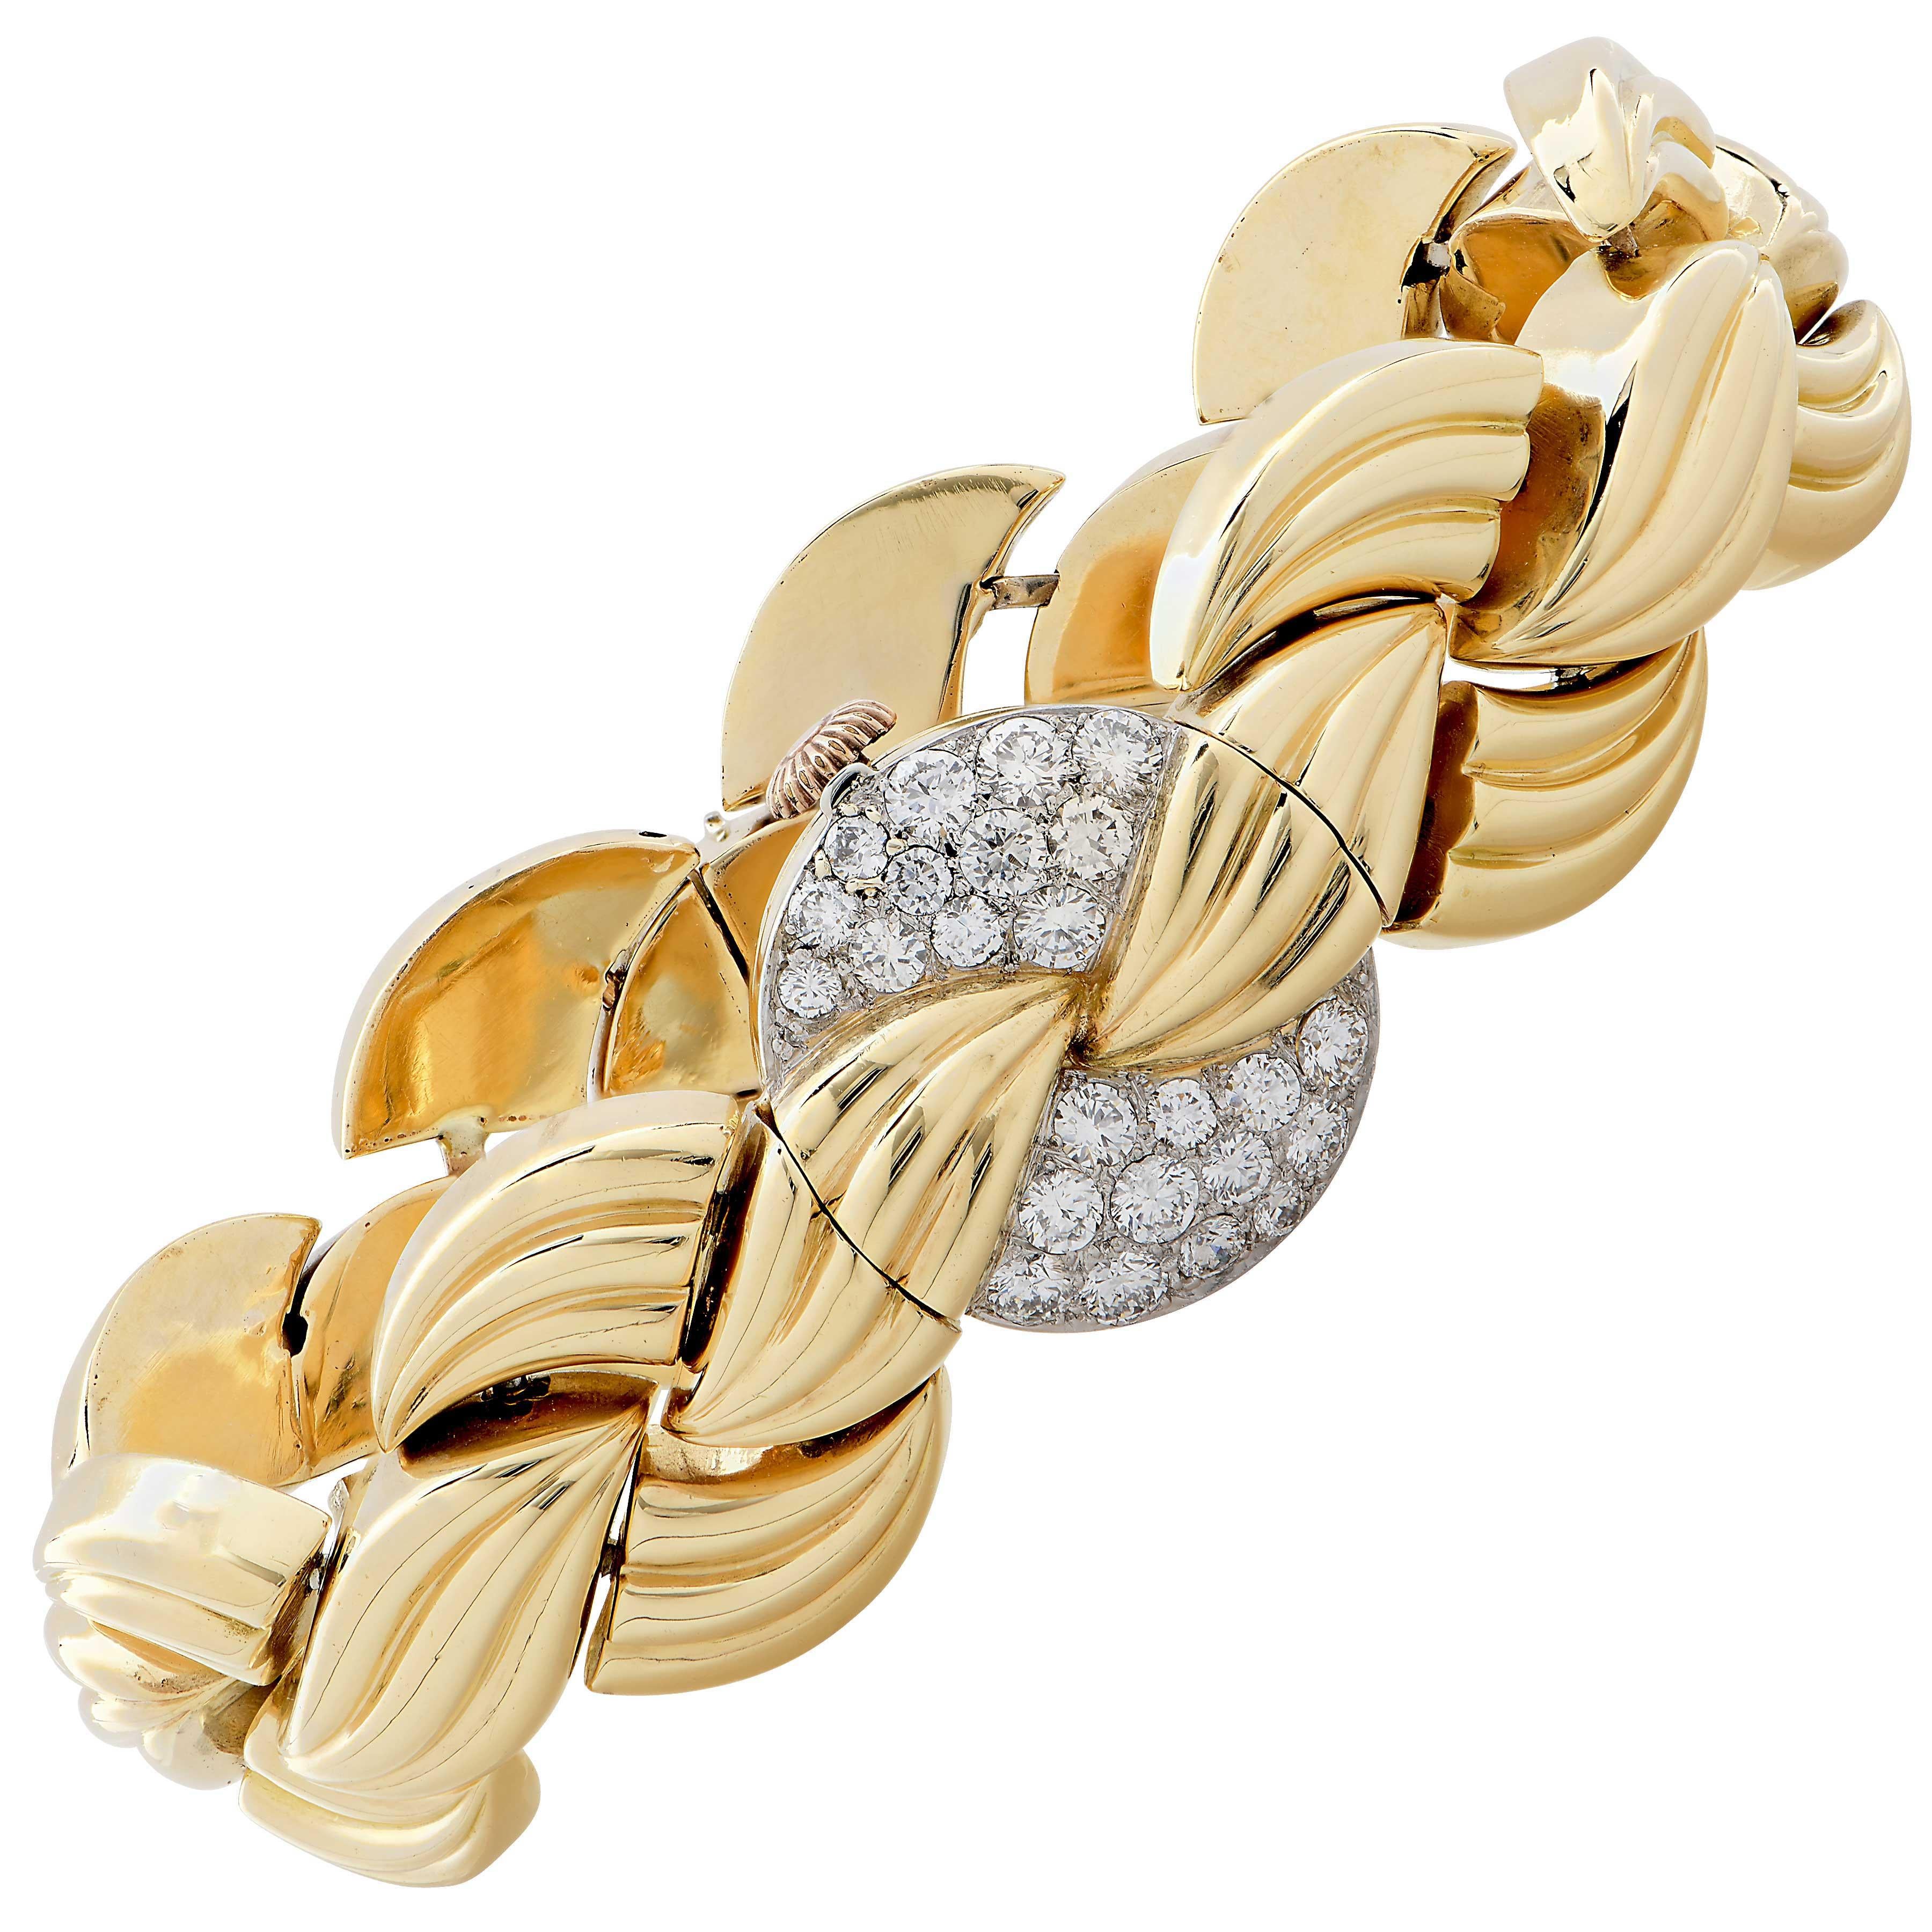 Van Cleef & Arpels diamond and gold bracelet watch. 

Length 6 1/2.